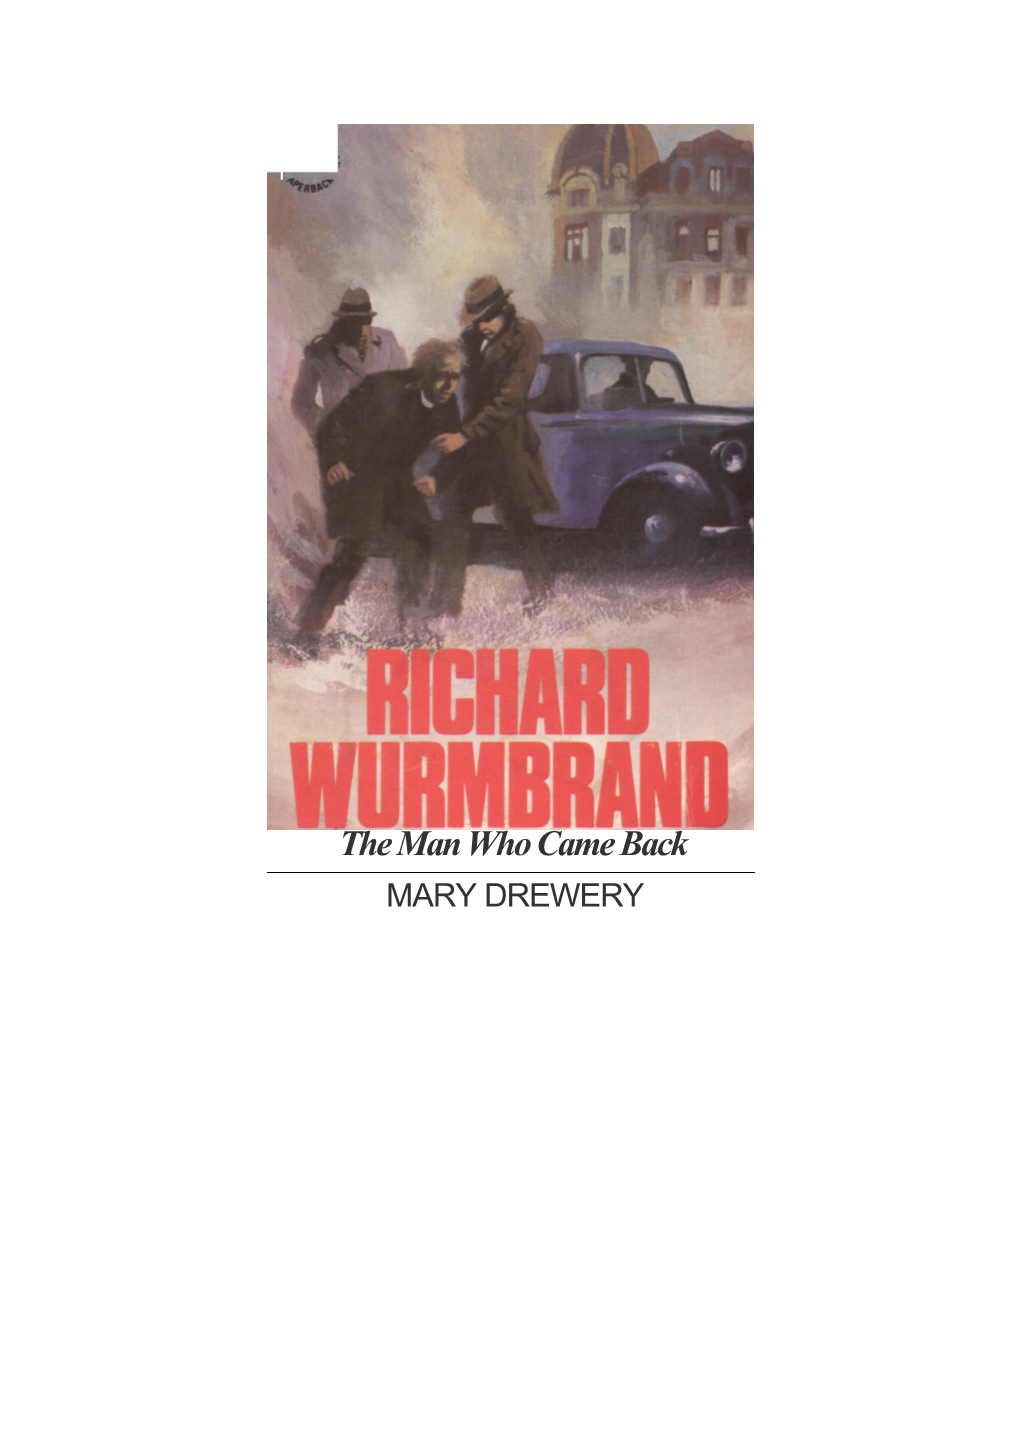 Richard Wurmbrand: the Man Who Came Back